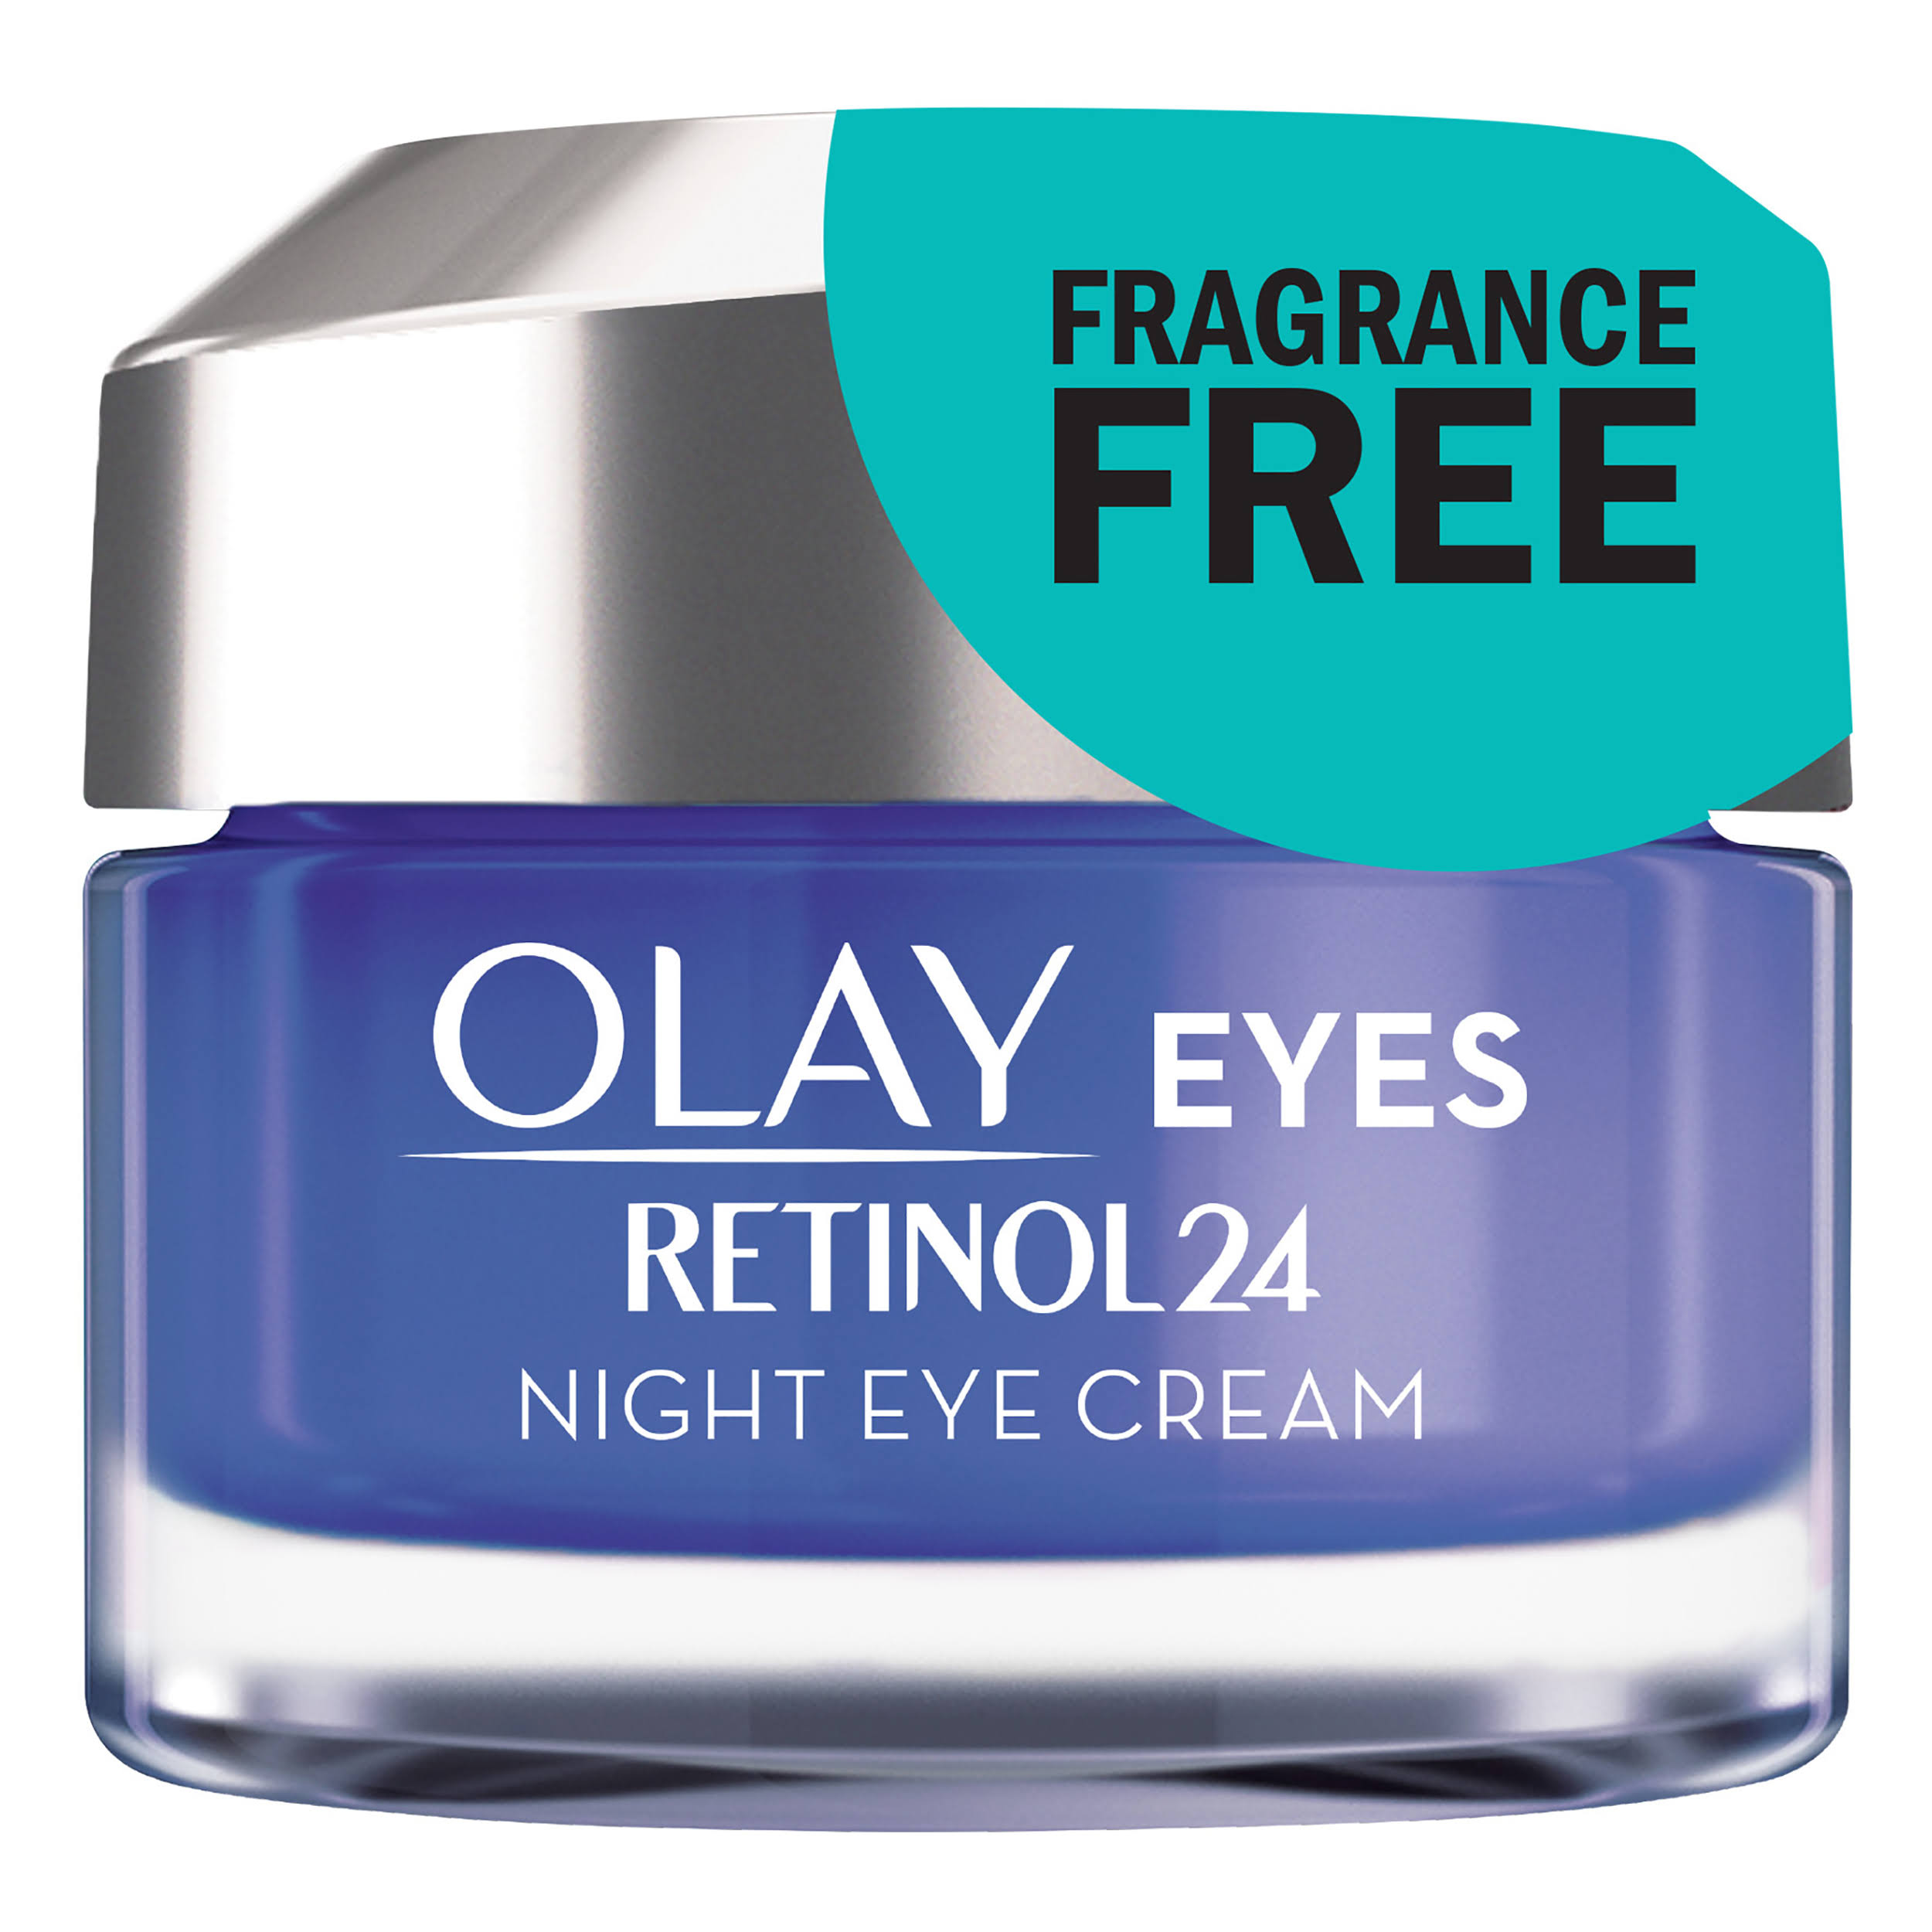 Olay Eyes Retinol 24 Night Eye Cream - 0.5oz